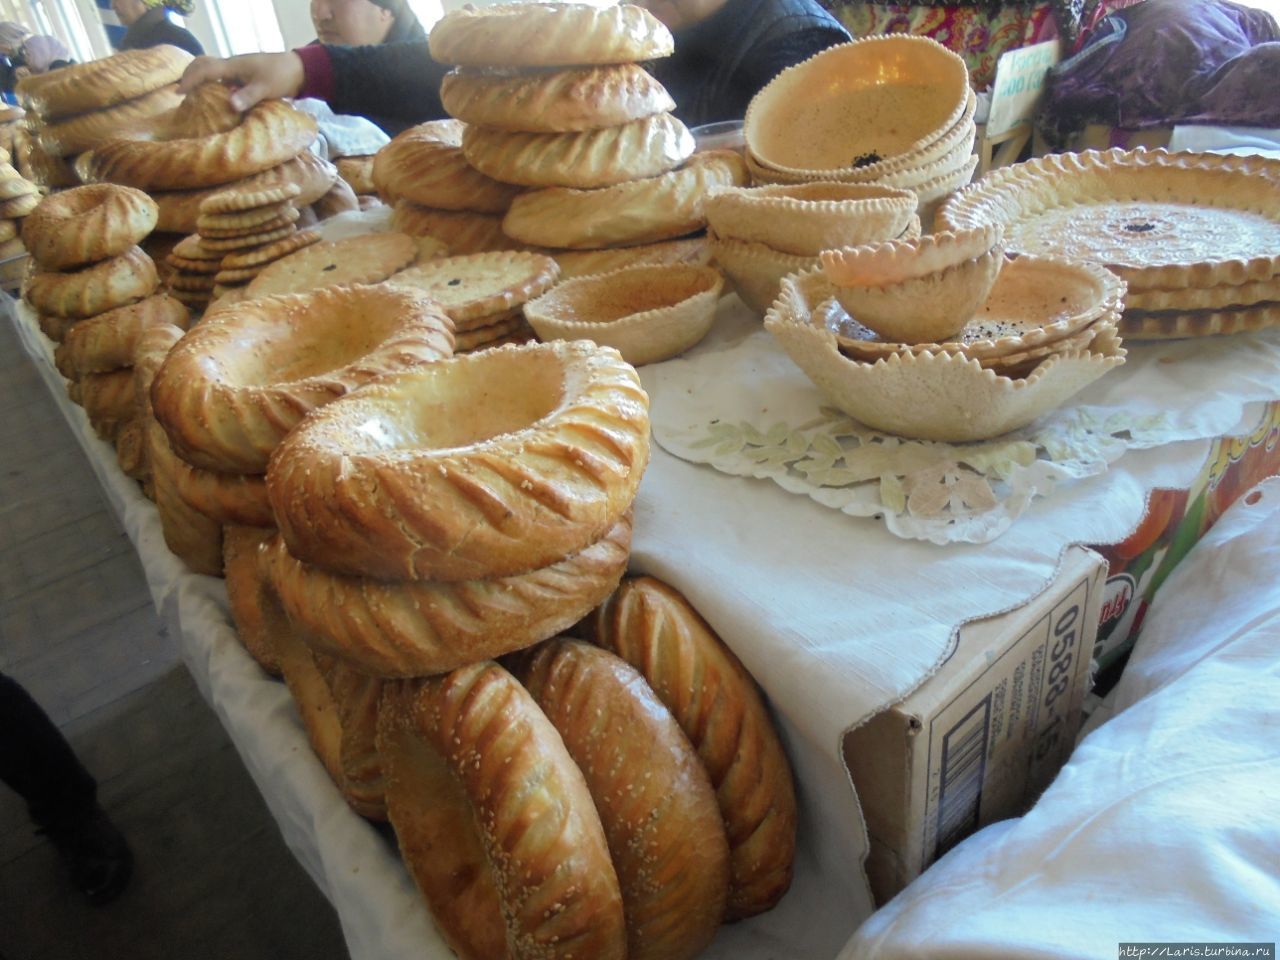 Ташкент — город хлебный Узбекистан